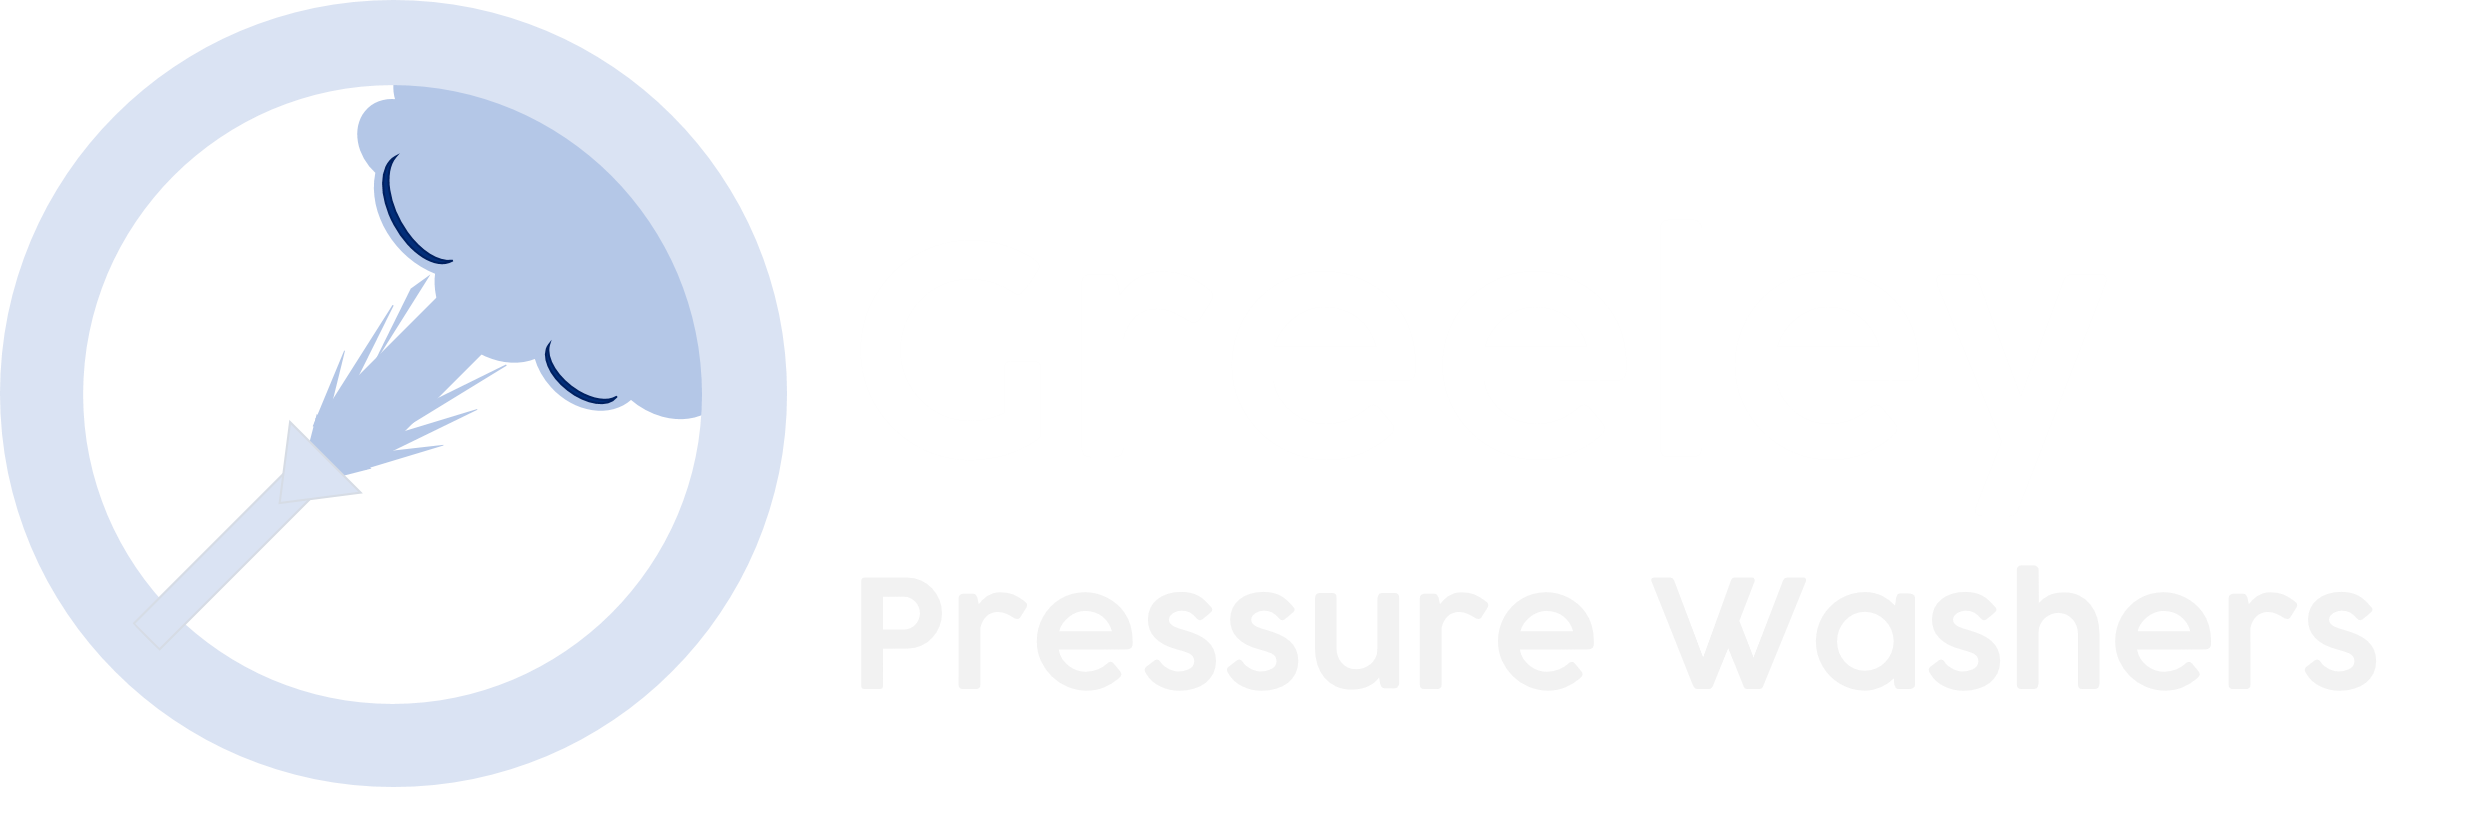 Greeley Colorado, Pressure Washers Logo